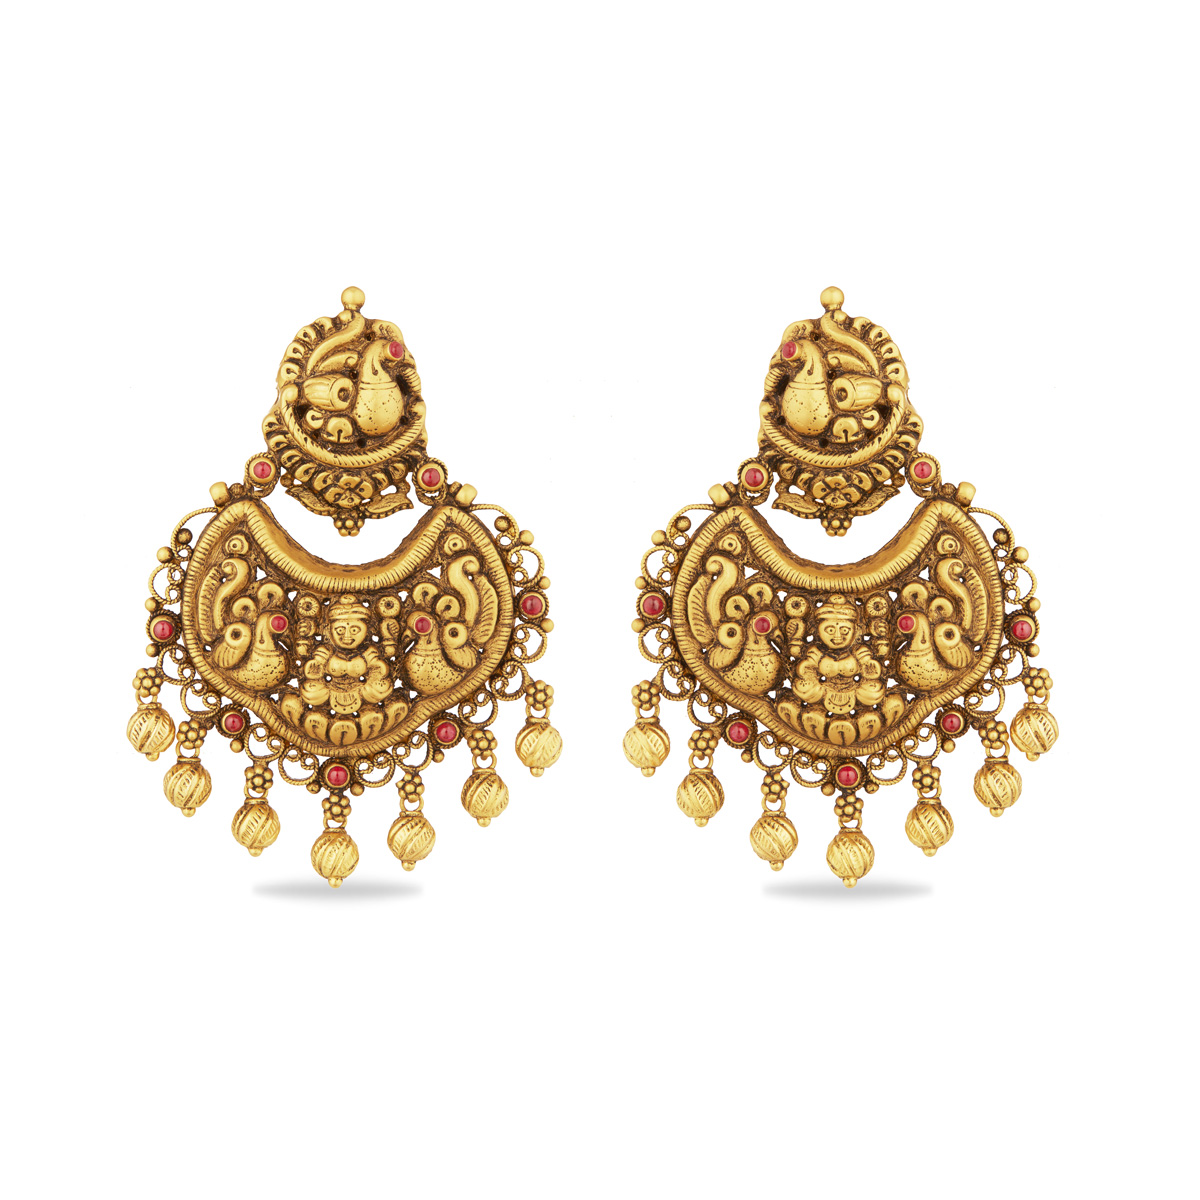 The Kalisha Stud Earrings